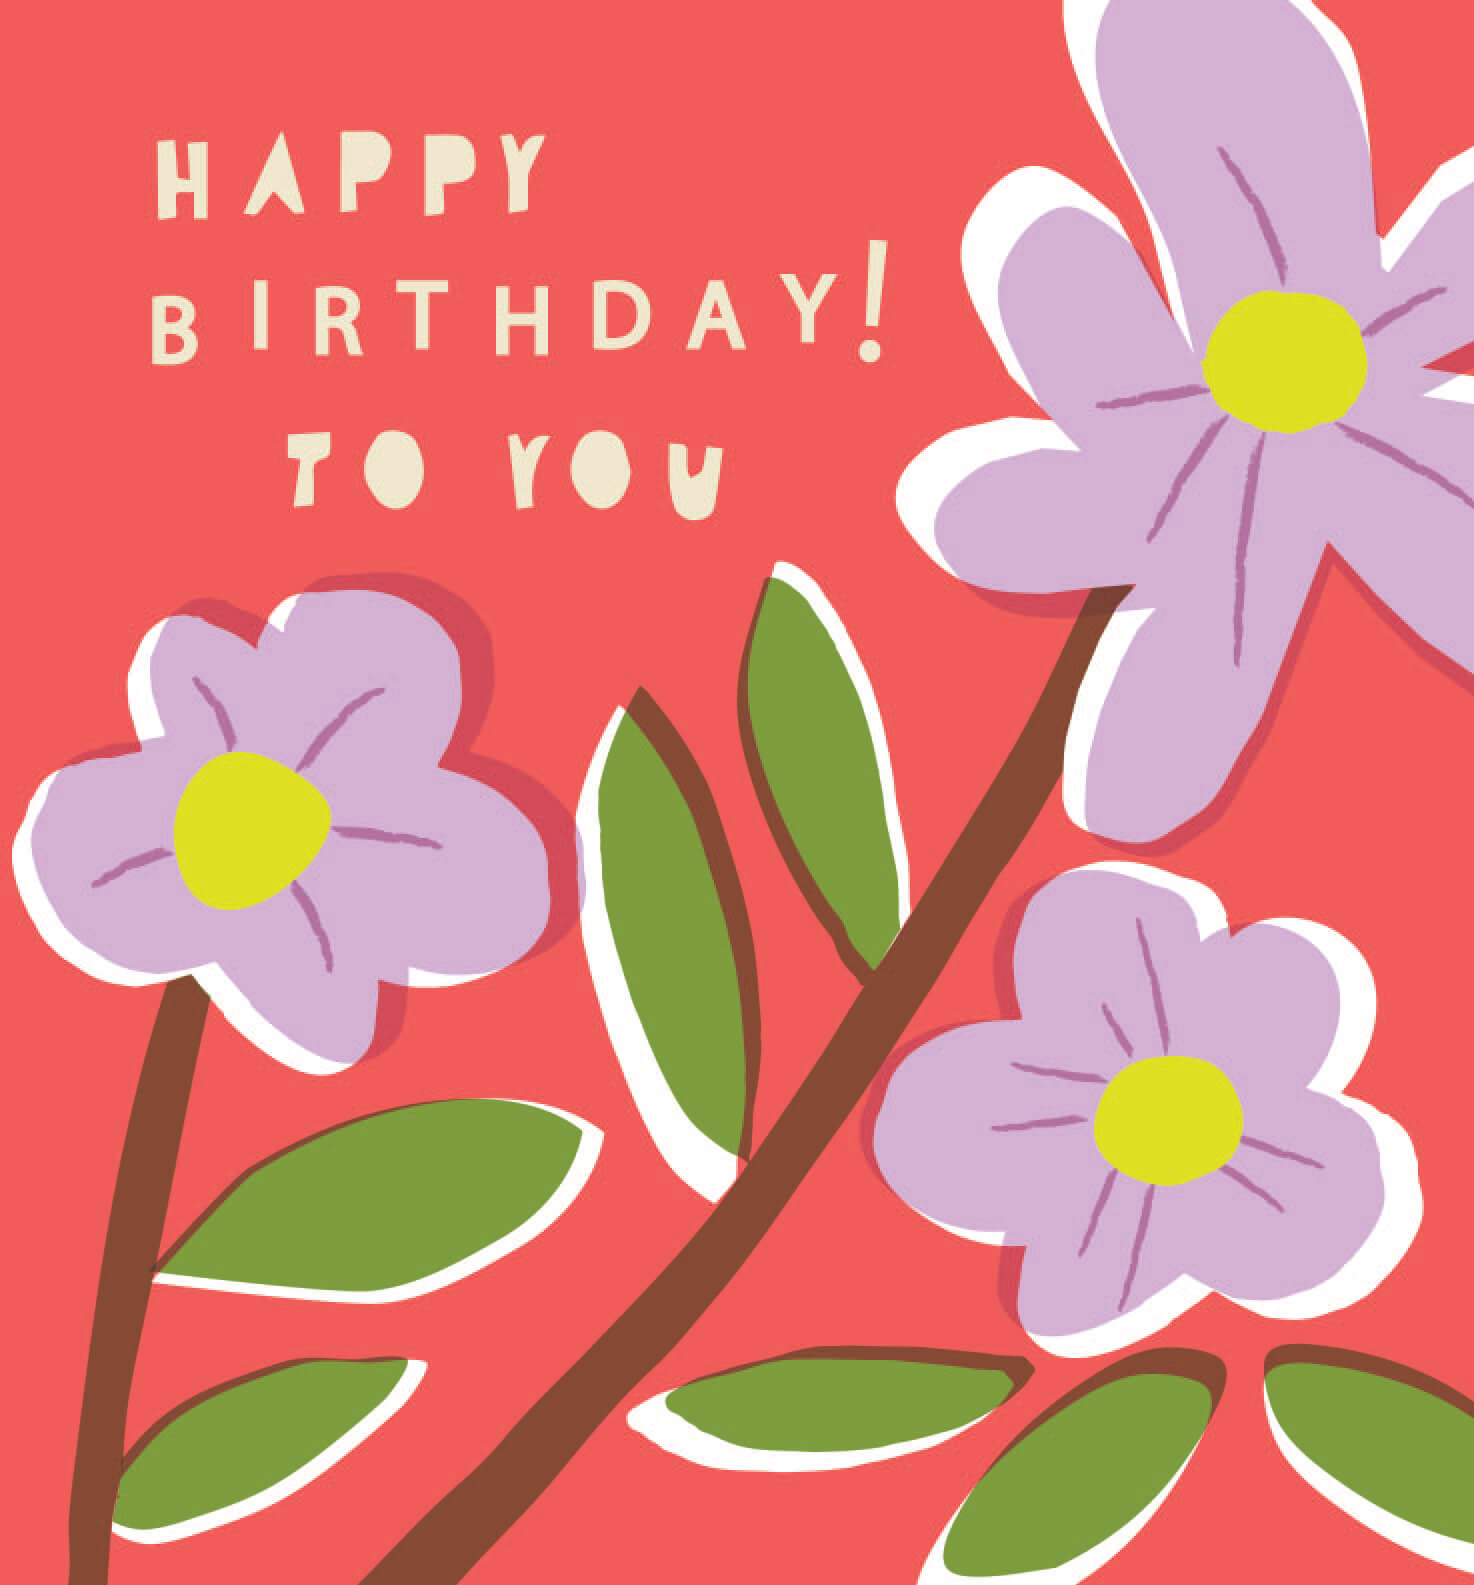 Pink Flowers Birthday Card